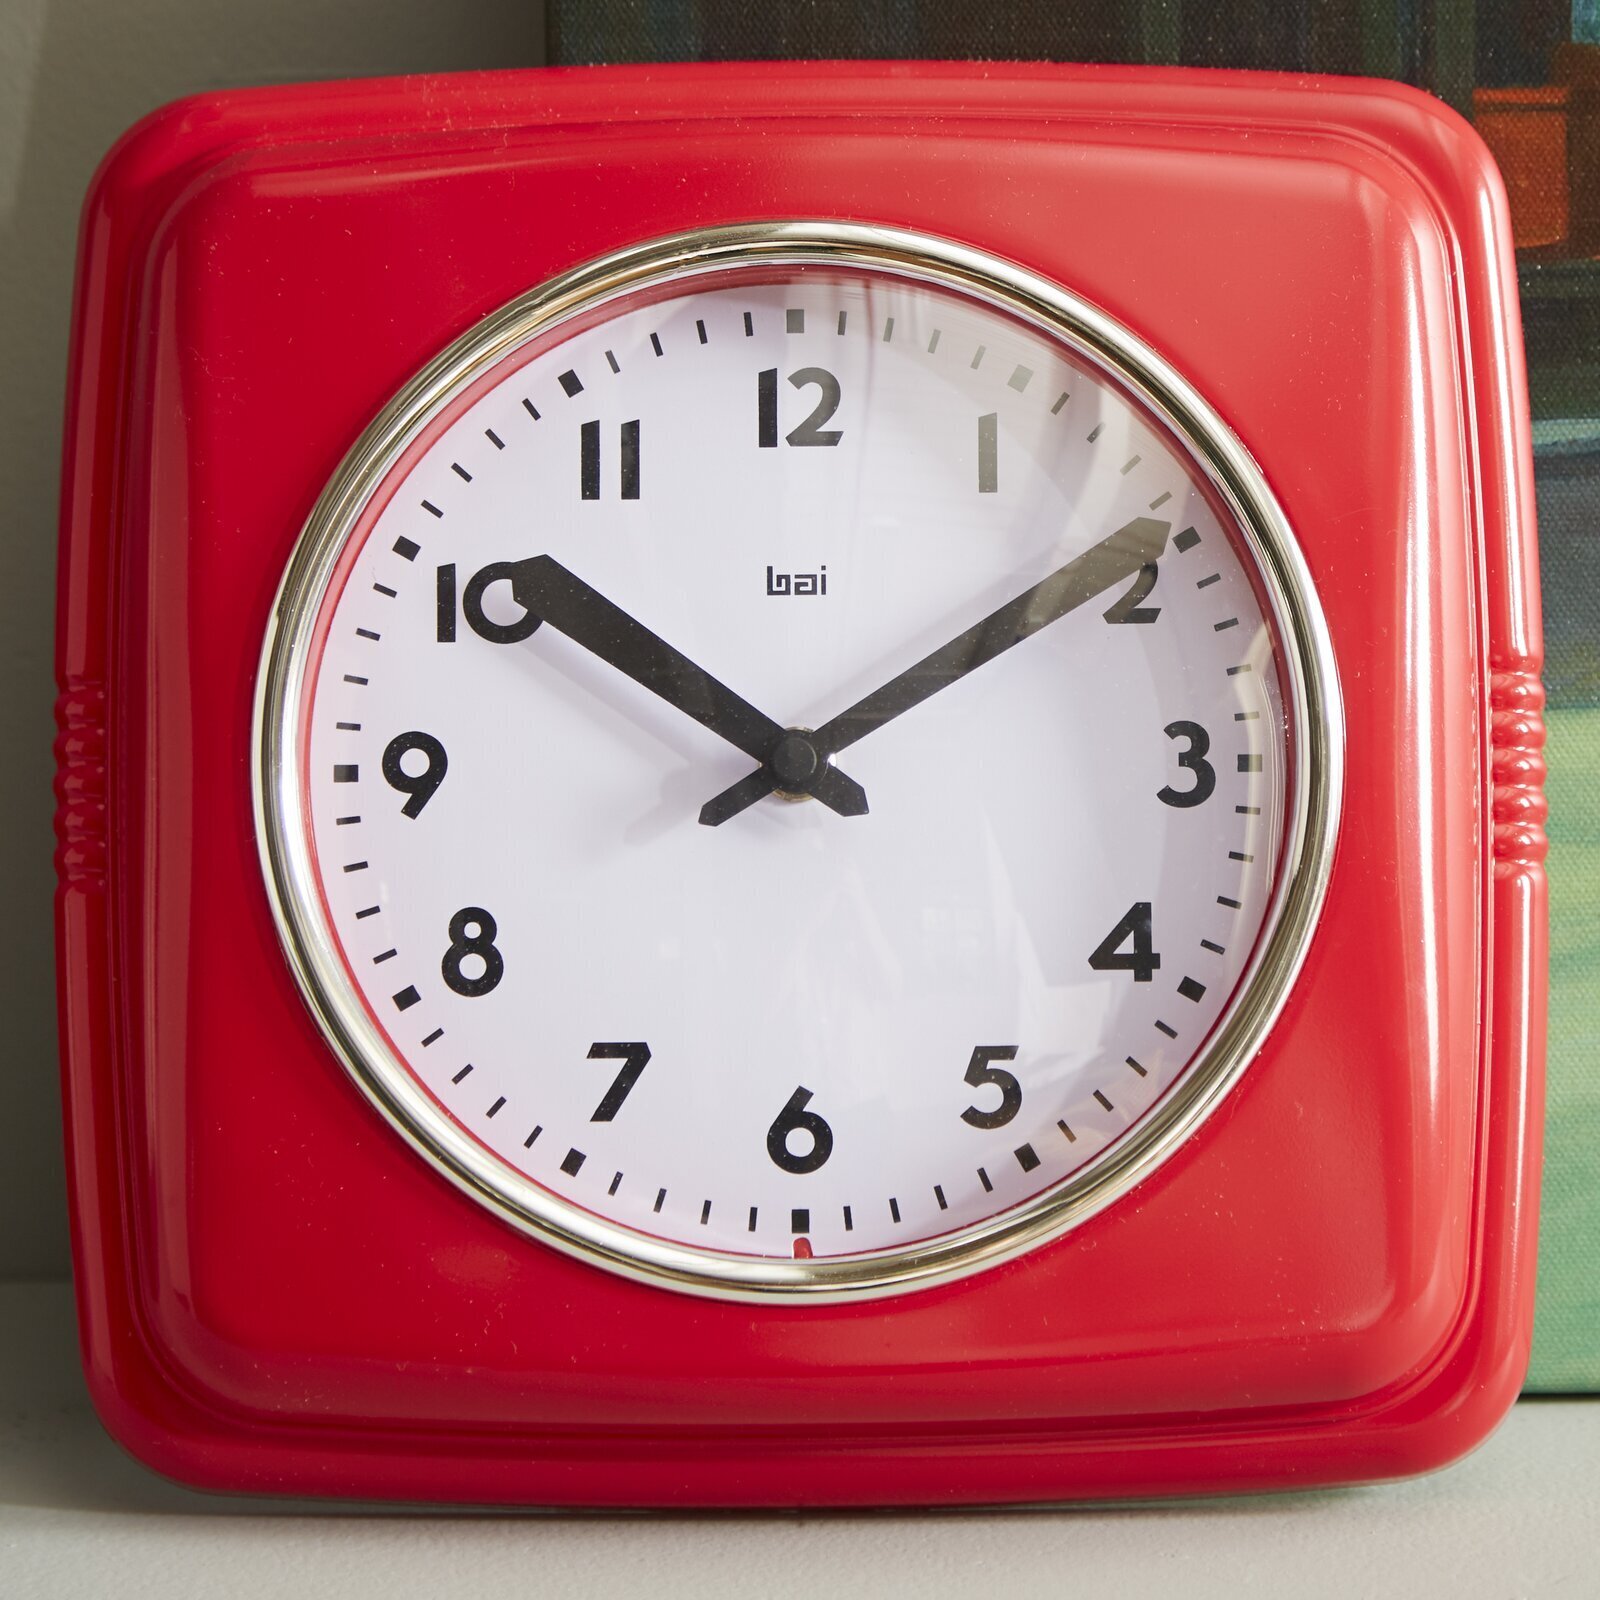 Retro kitchen wall clock